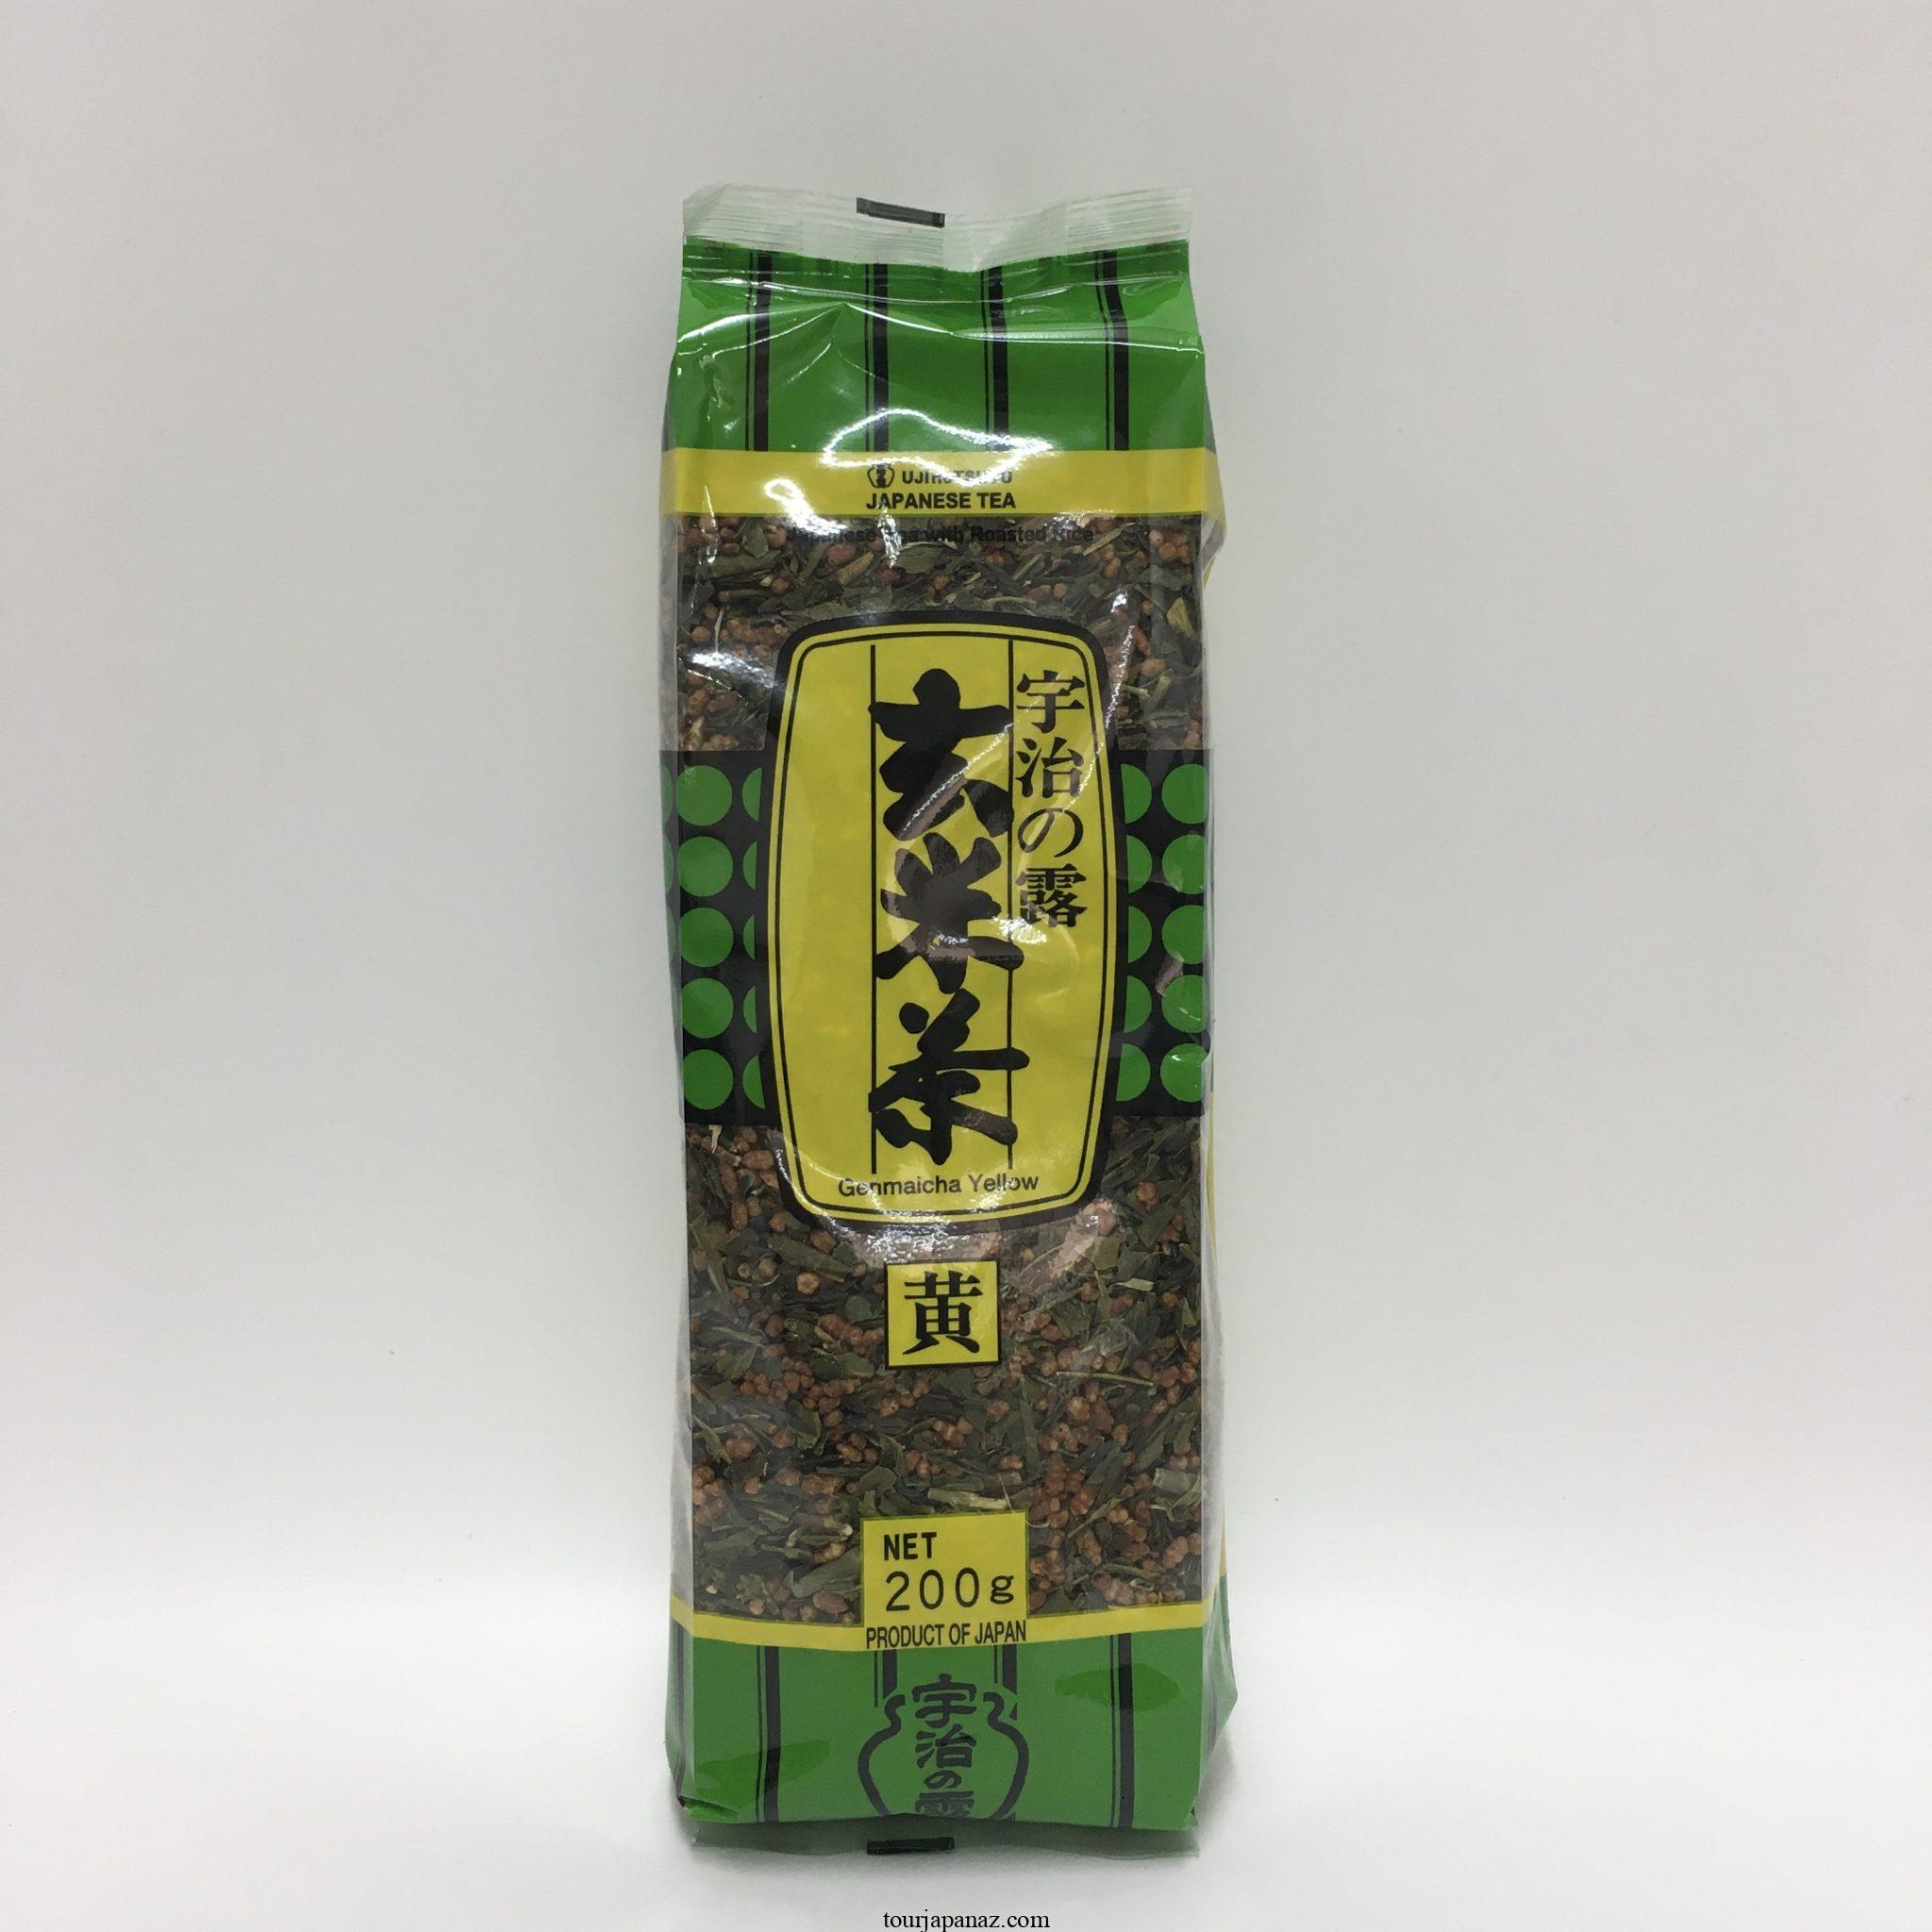 Ujinotsuyu Tokuyo Genmaicha Japanese Tea Bag 400g - Japanese Tea With Roasted Rice 5